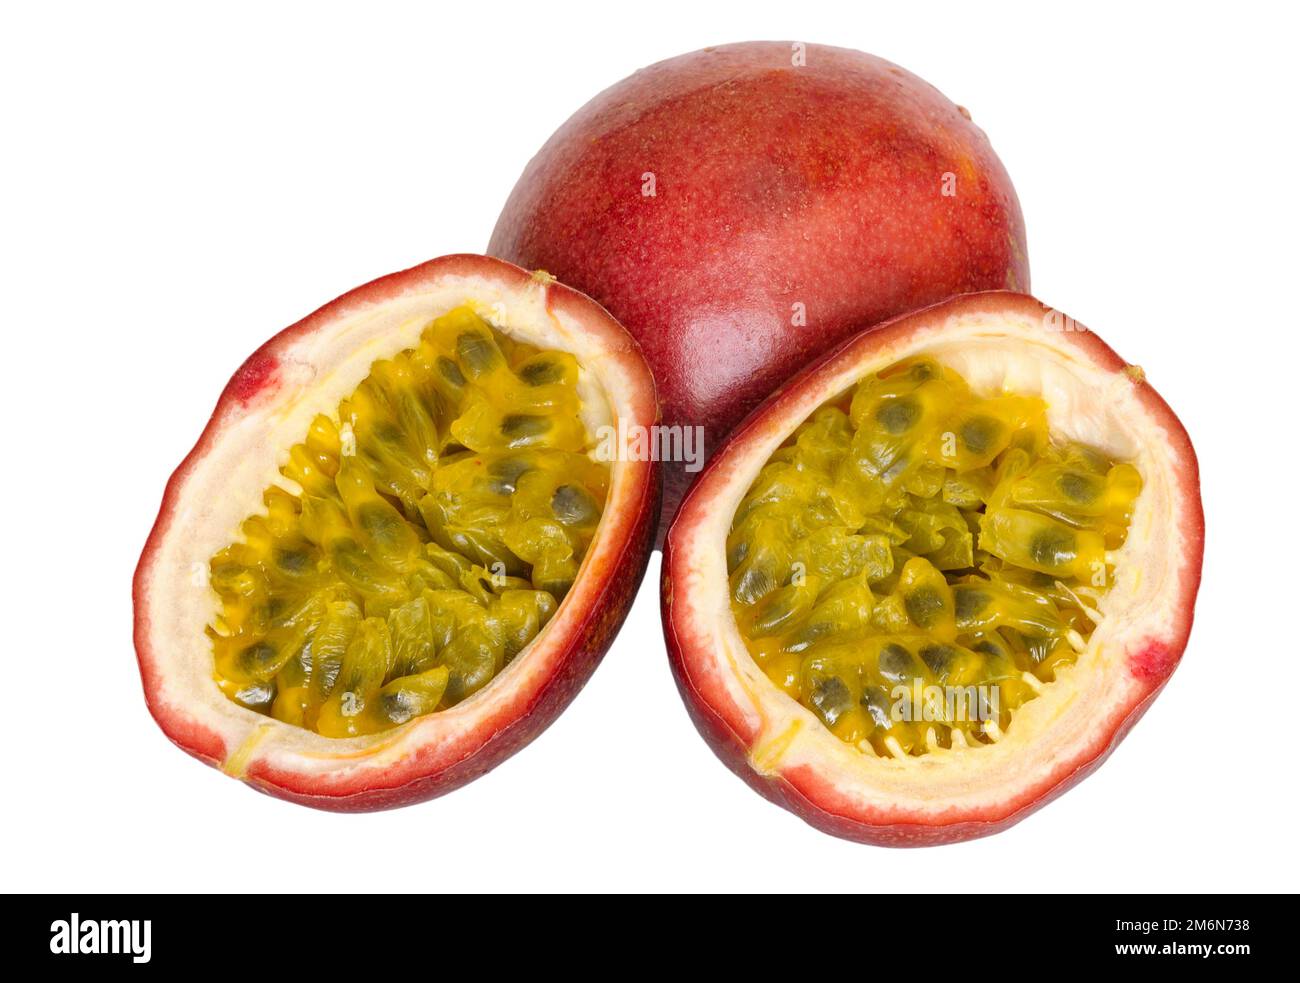 Ð¡ut passiflora fruit isolated on white background Stock Photo